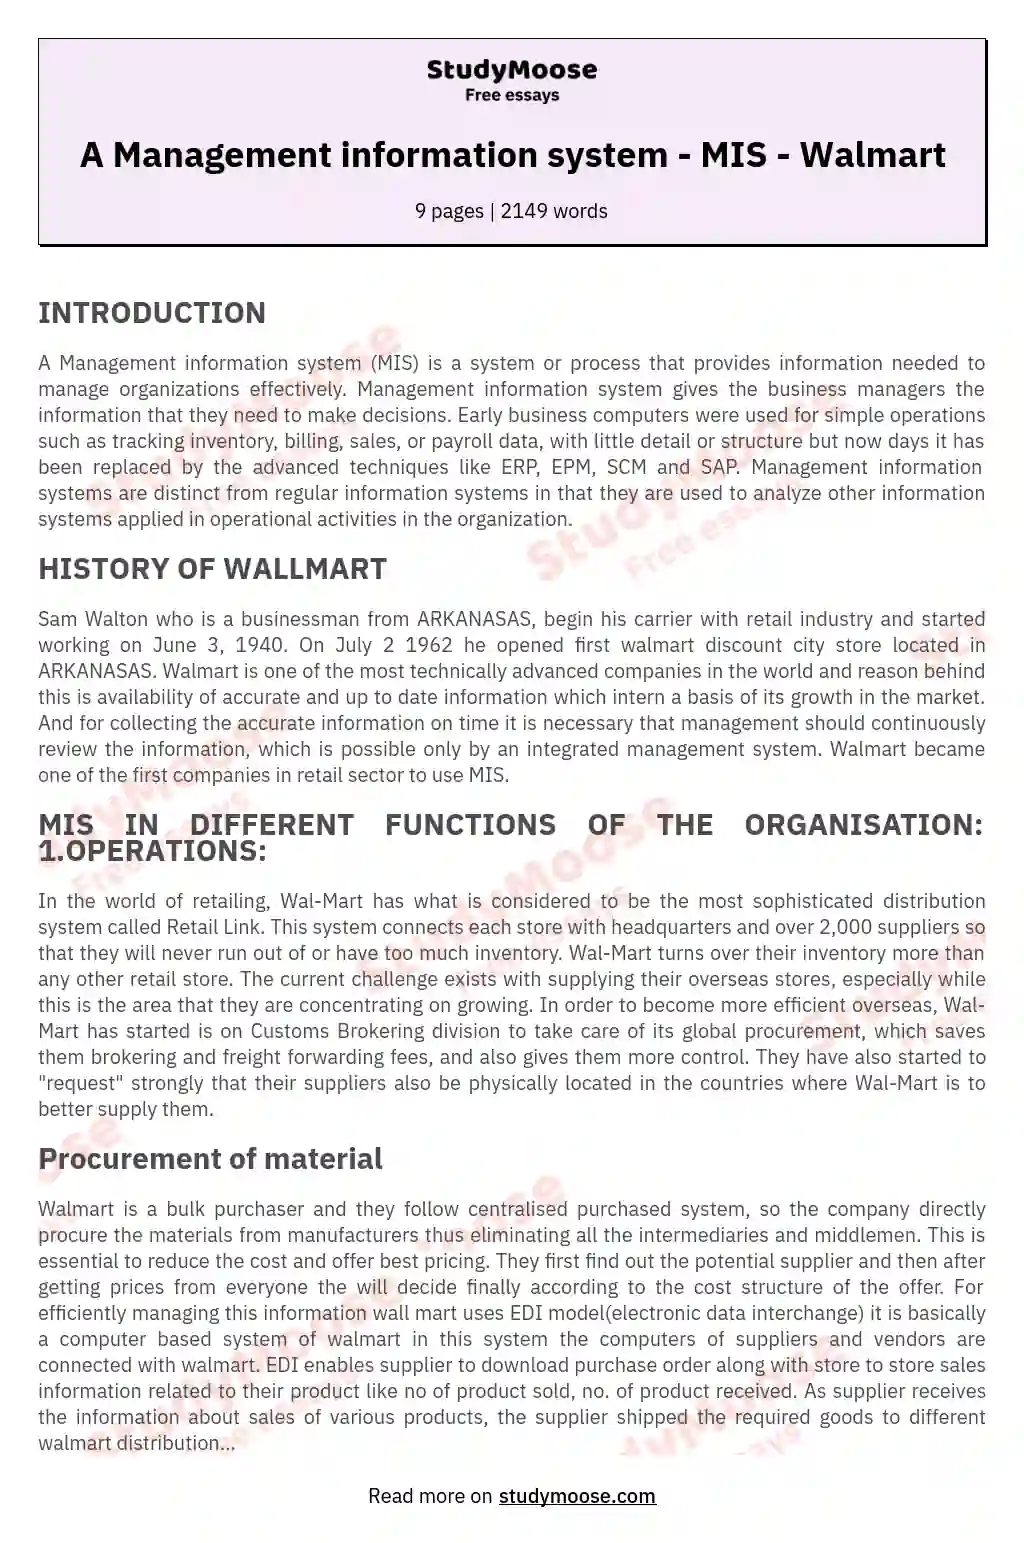 A Management information system - MIS - Walmart essay